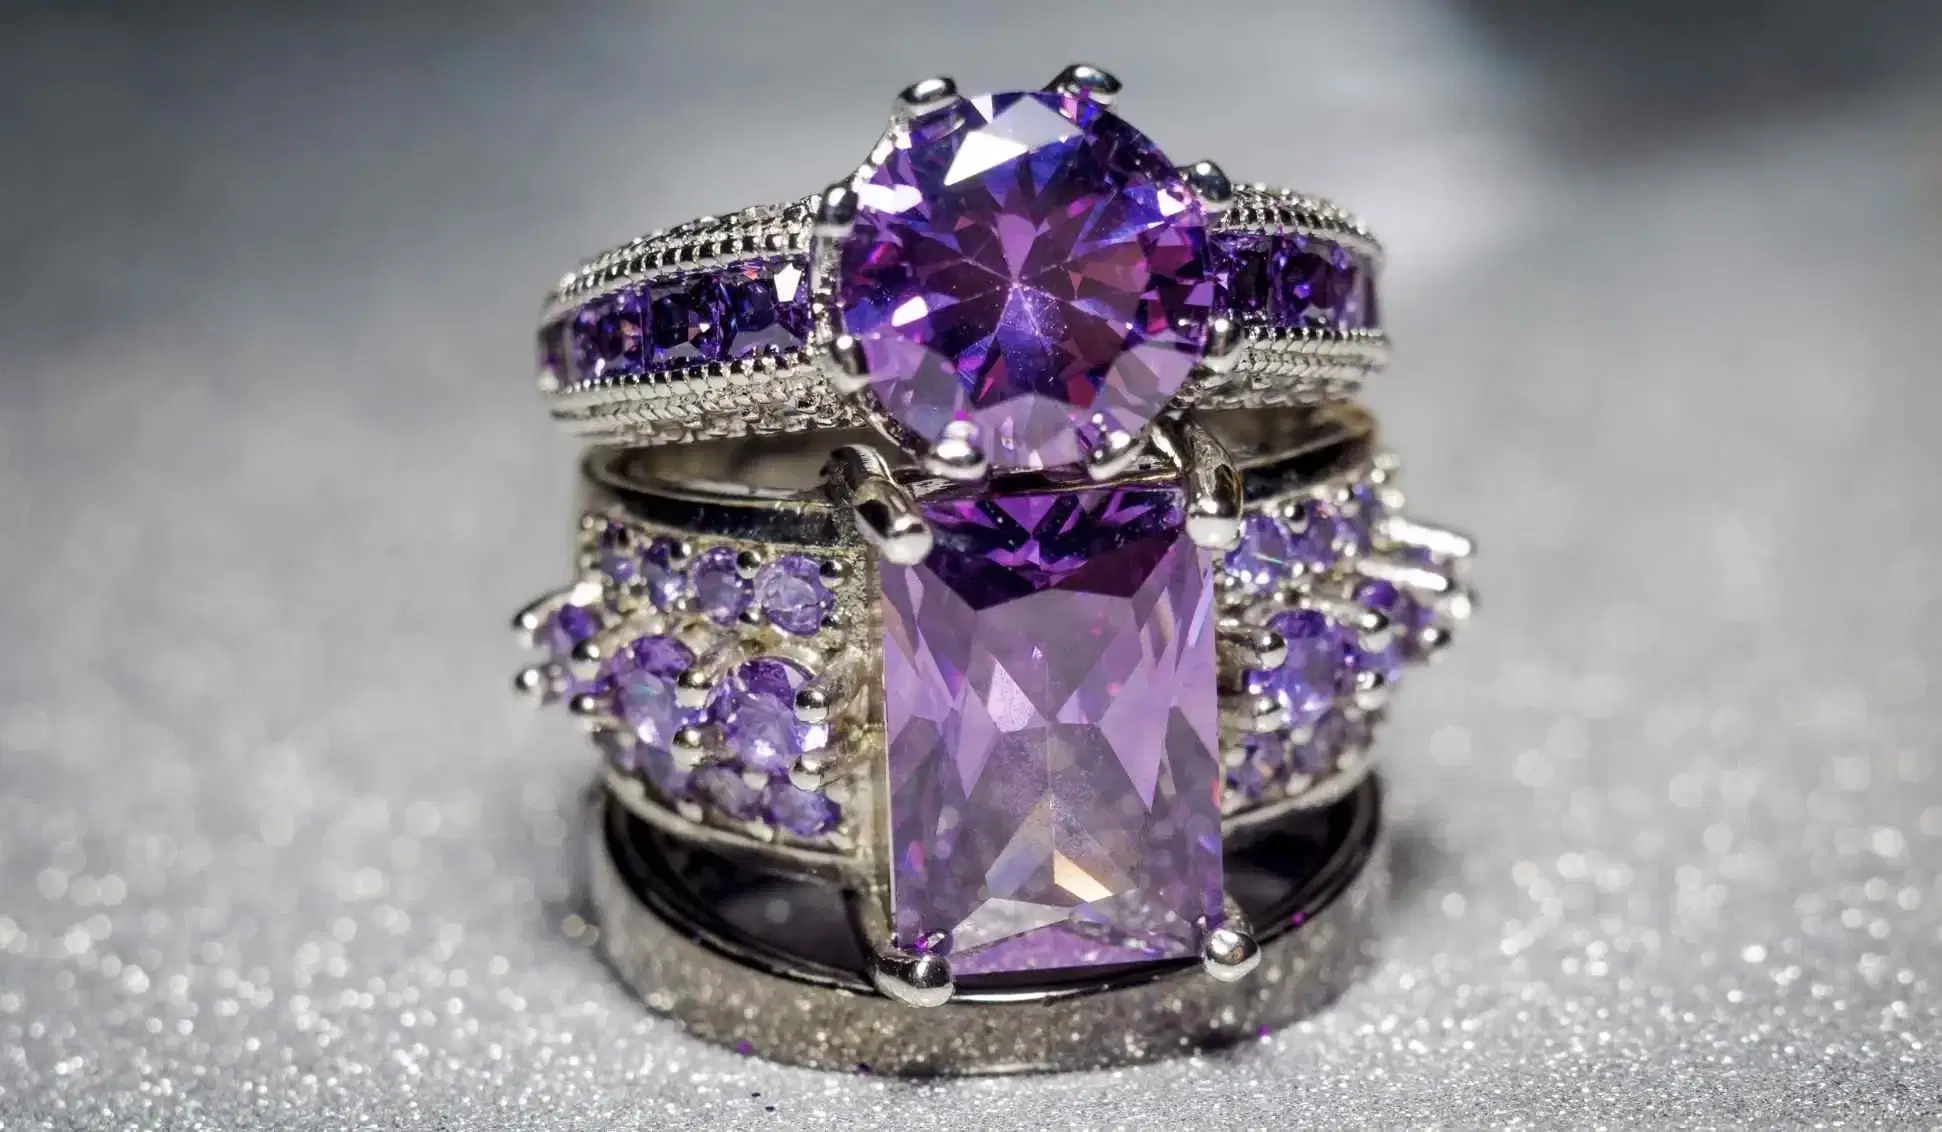 Purple gemstones